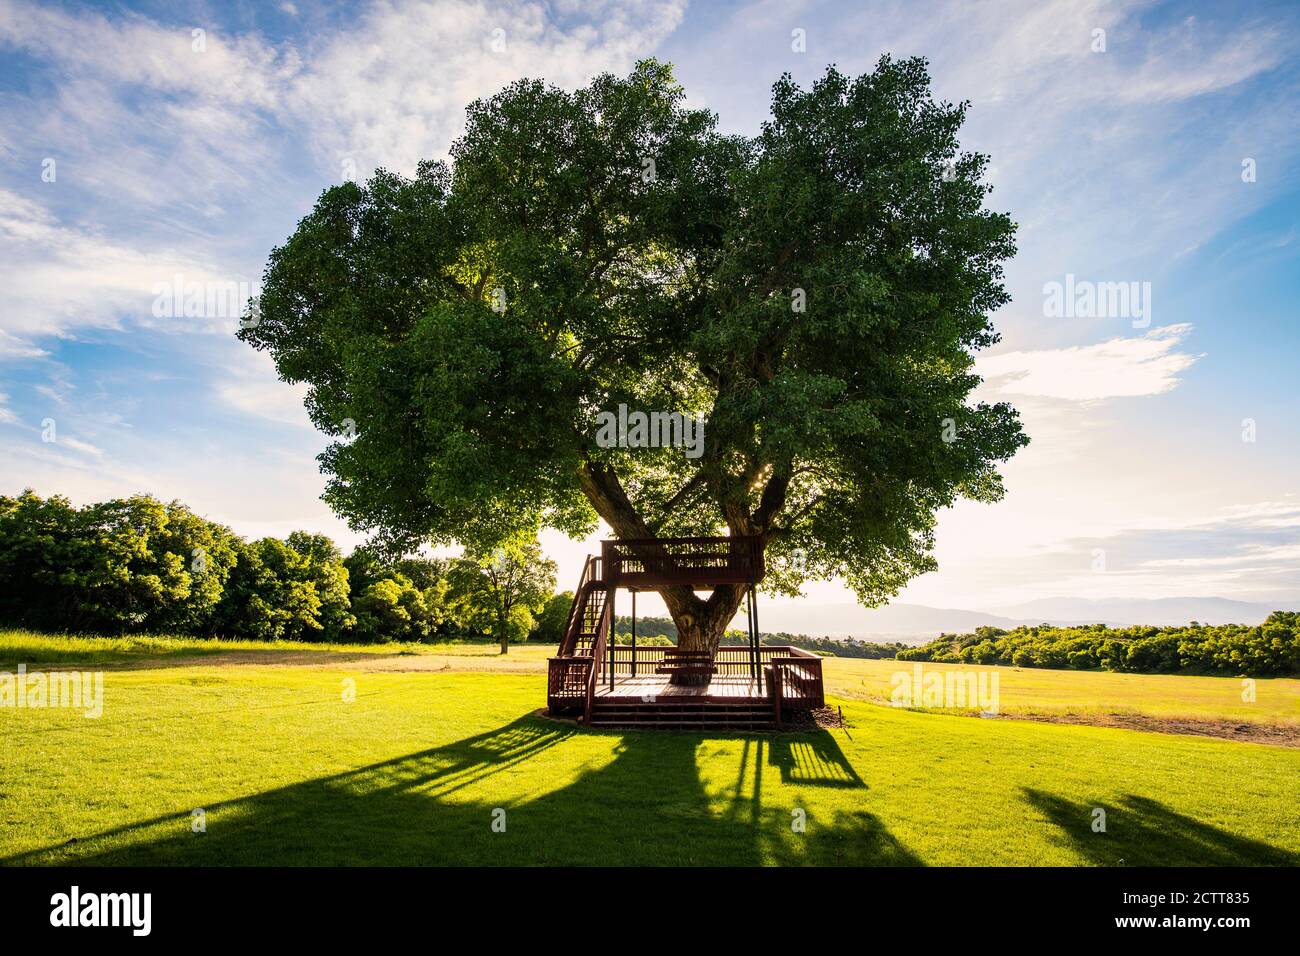 USA, Utah, Salem, Big tree with wooden tree house Stock Photo